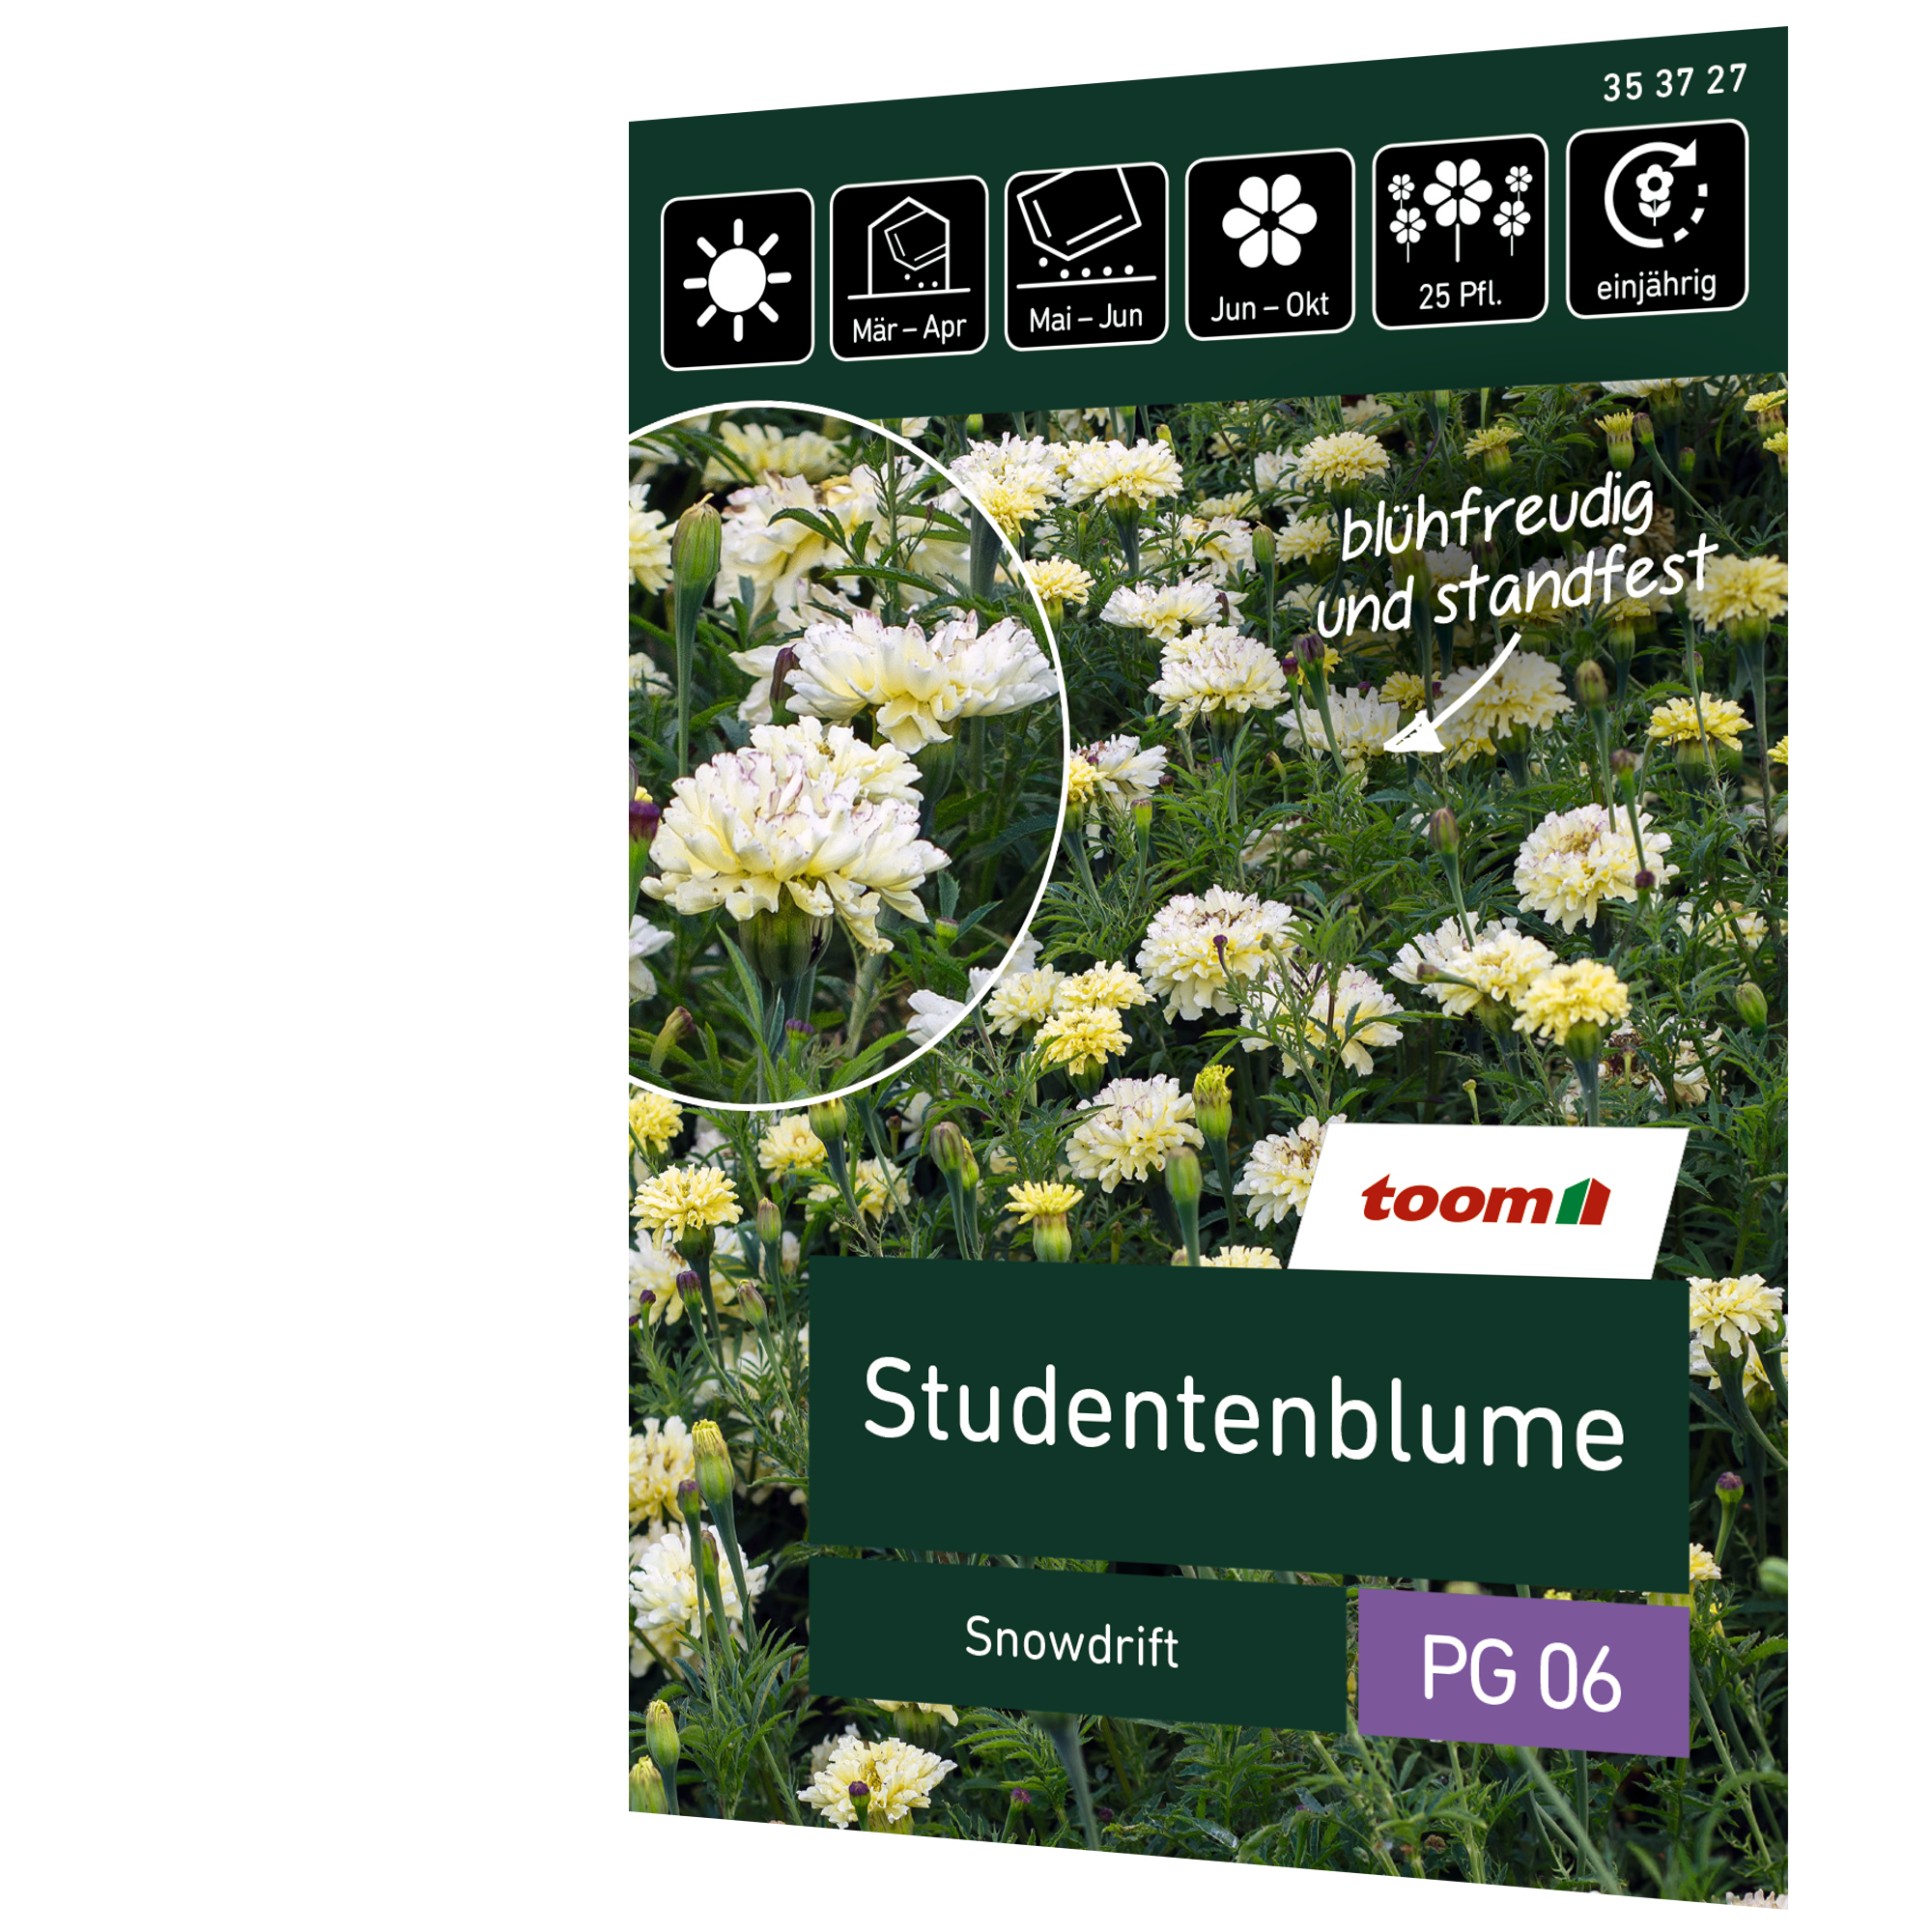 Studentenblume 'Snowdrift' + product picture